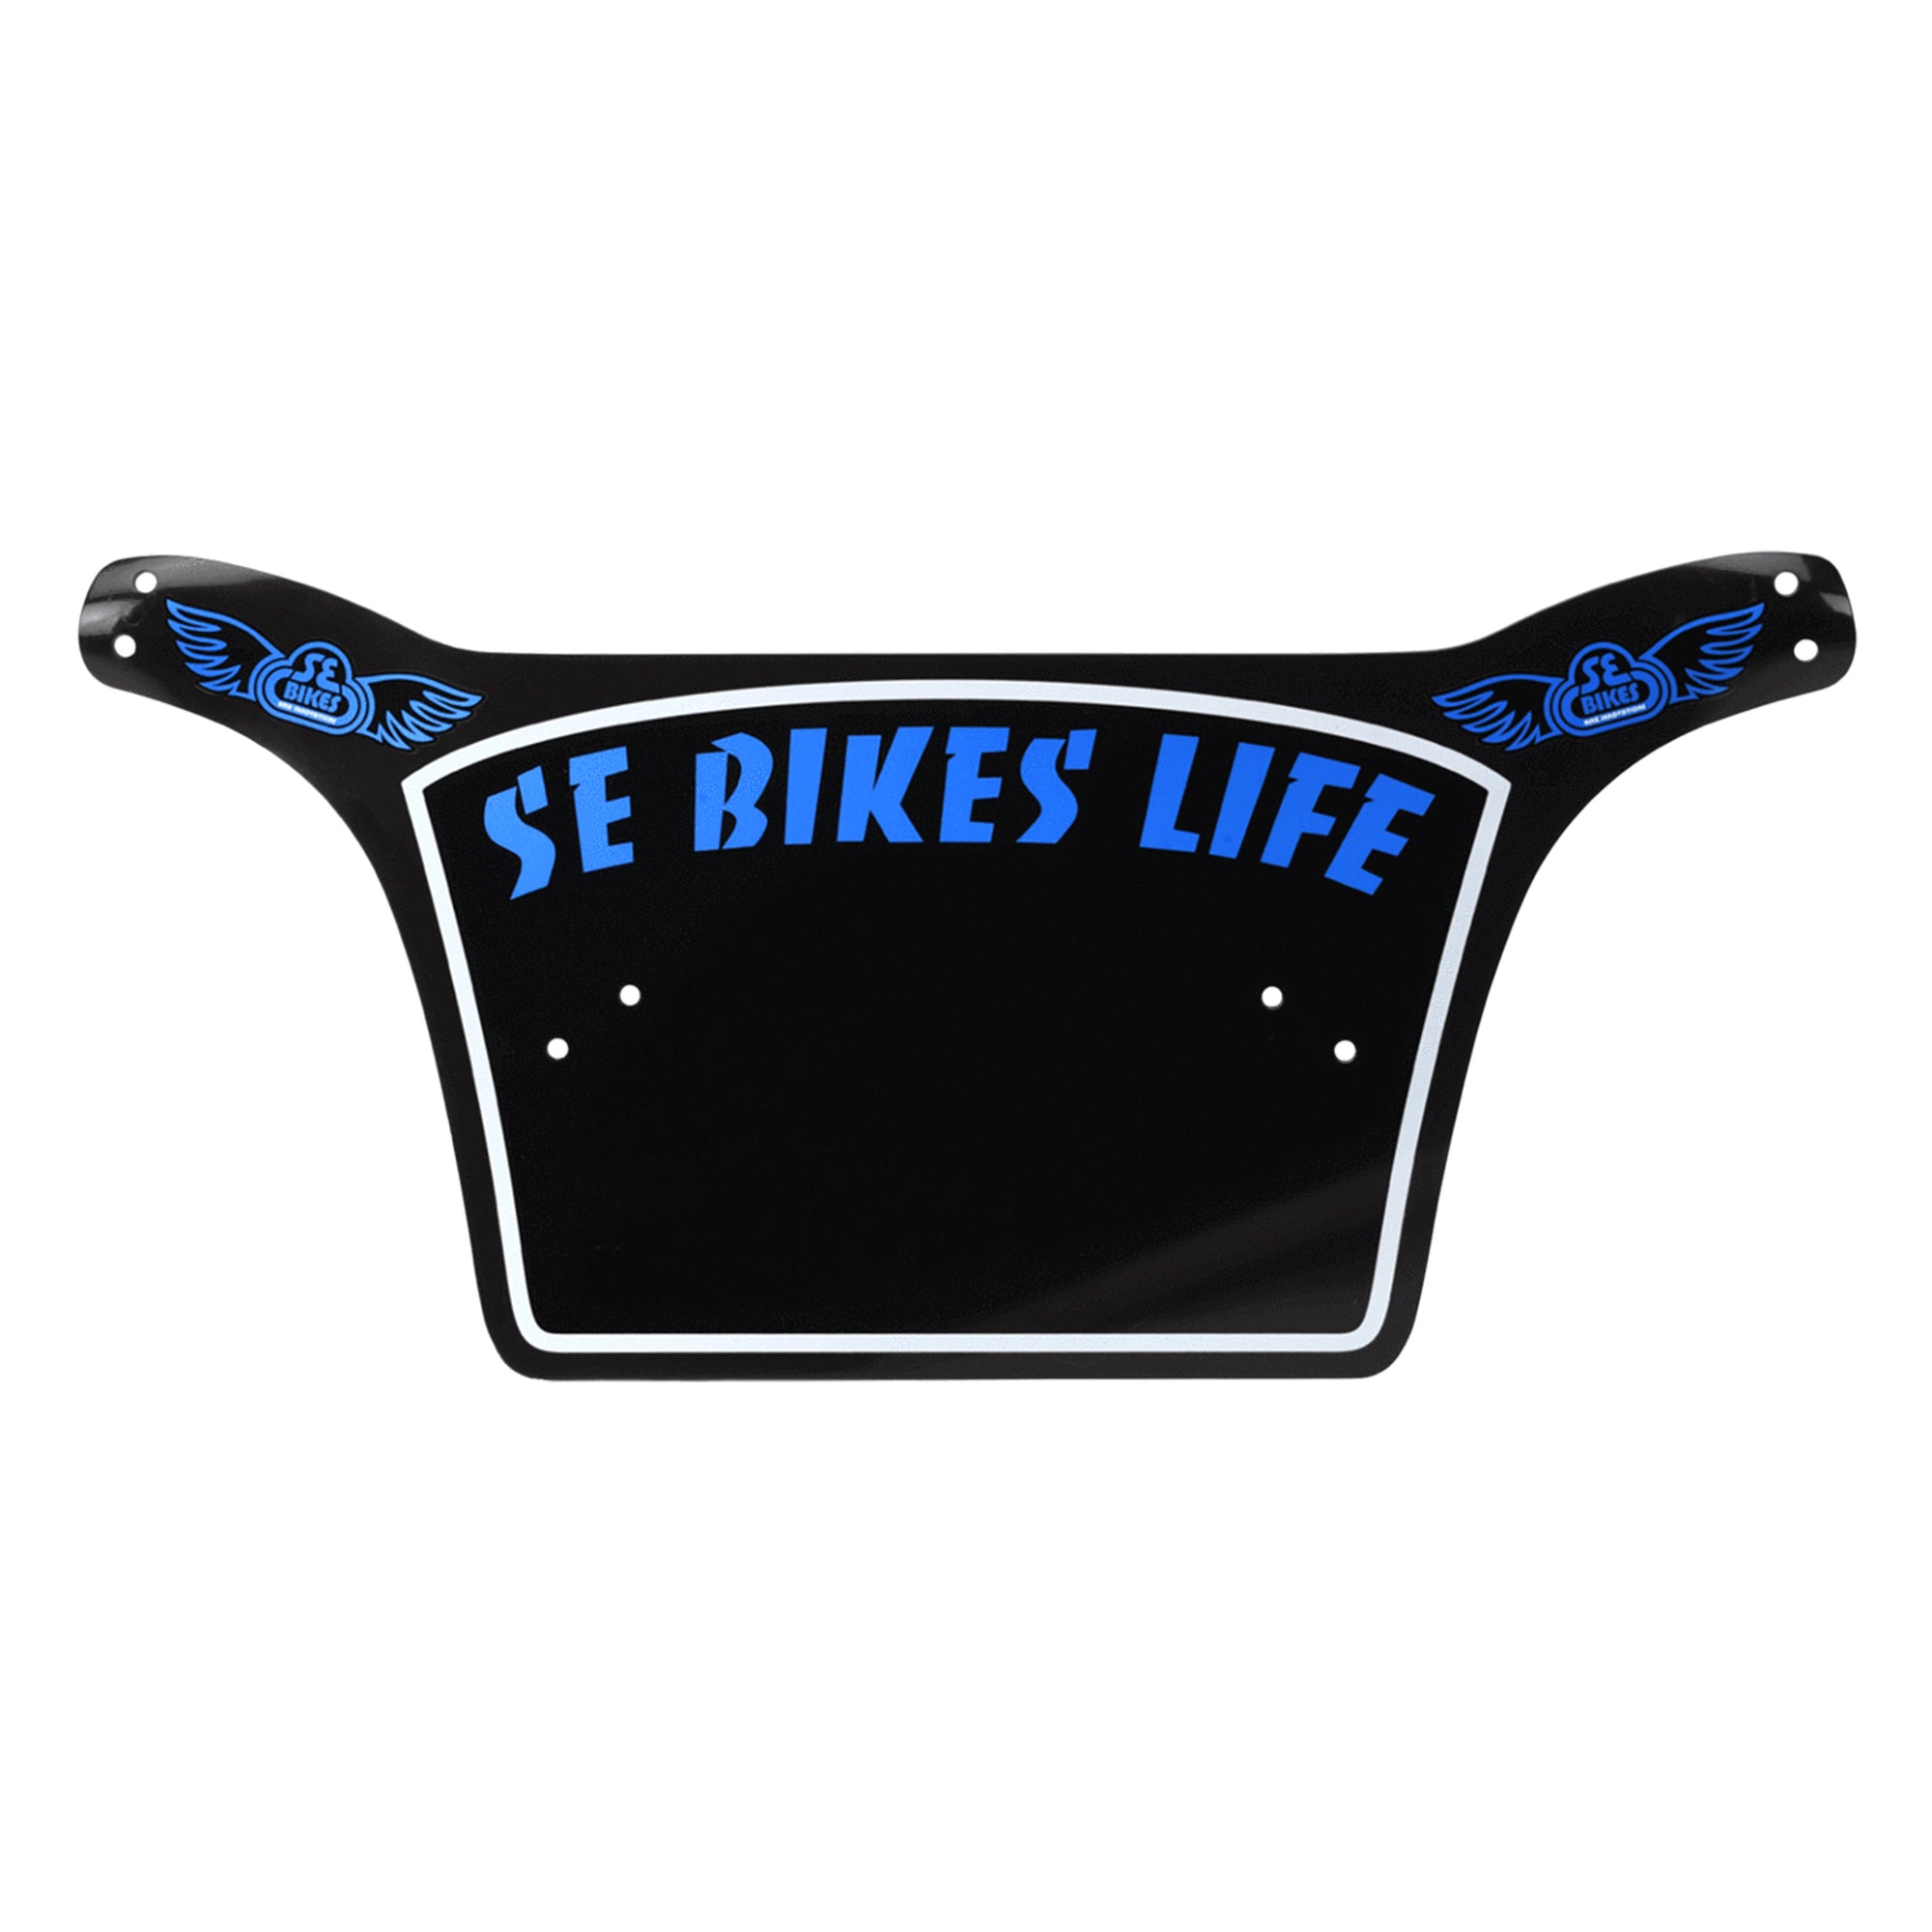 SE Racing "Bikes Life" BMX Number Plate - Black/Blue